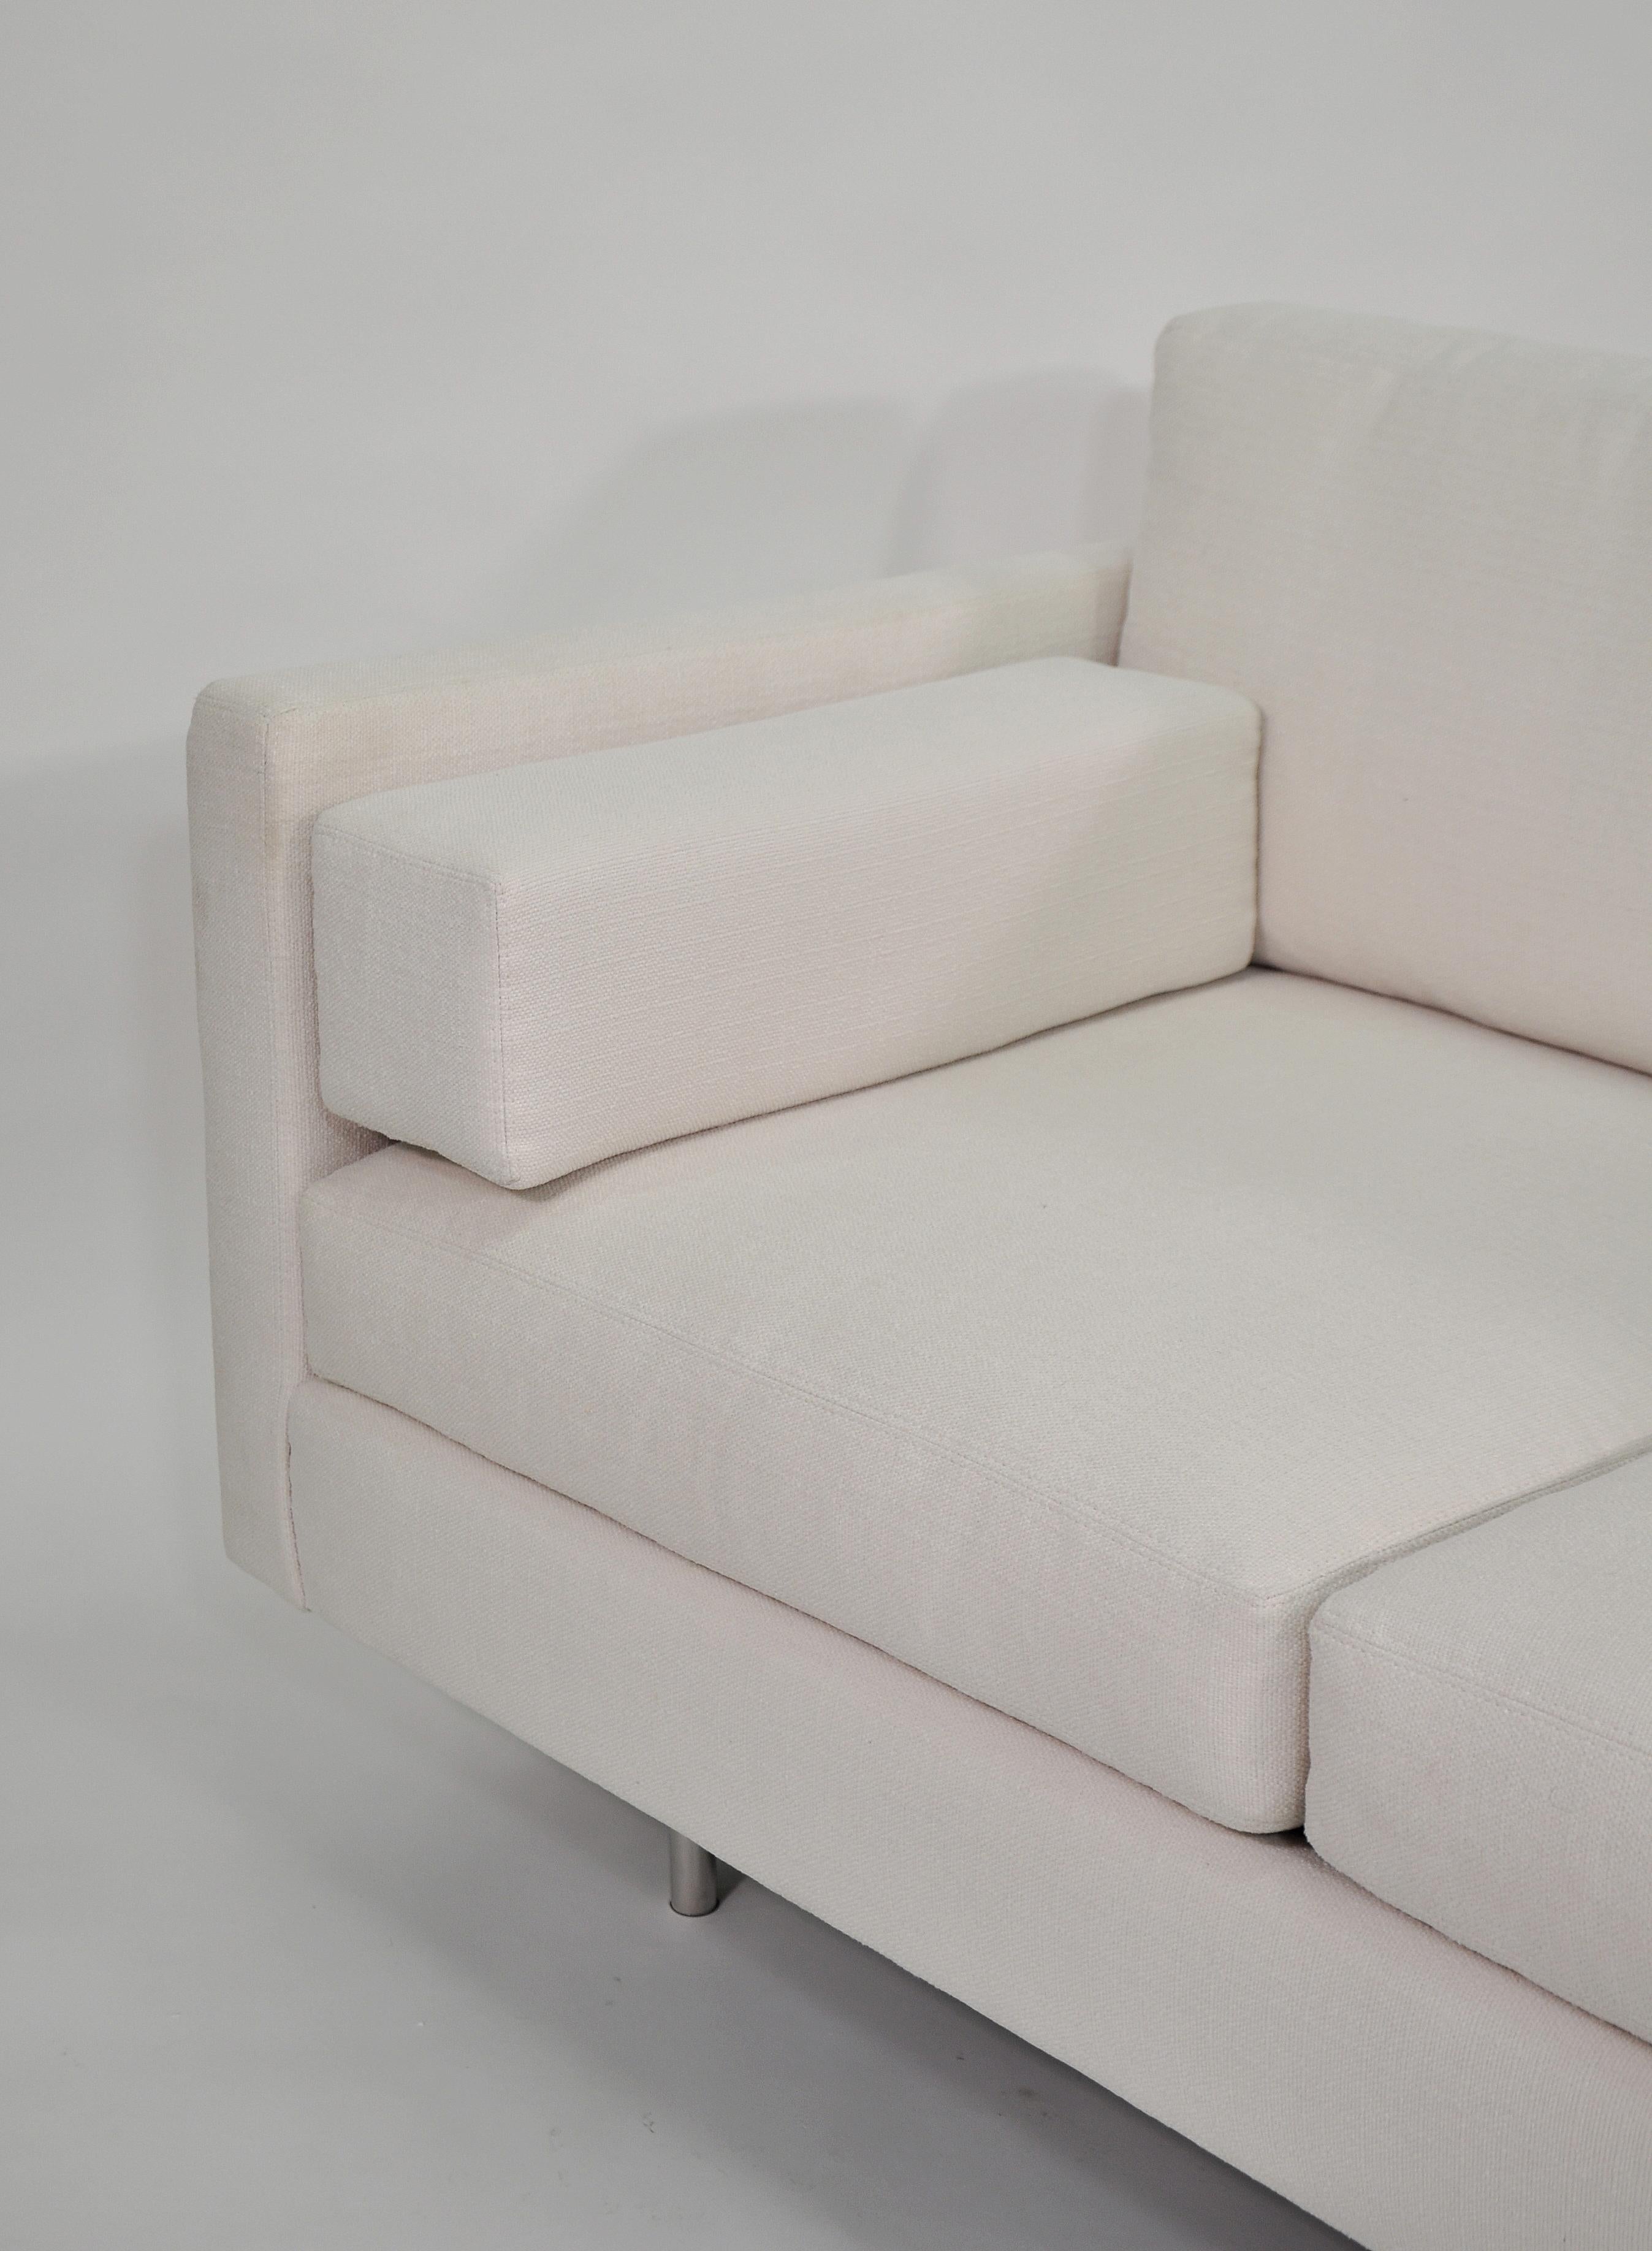 Stainless Steel Milo Baughman White Sofa, Thayer Coggin 855 Design Classic